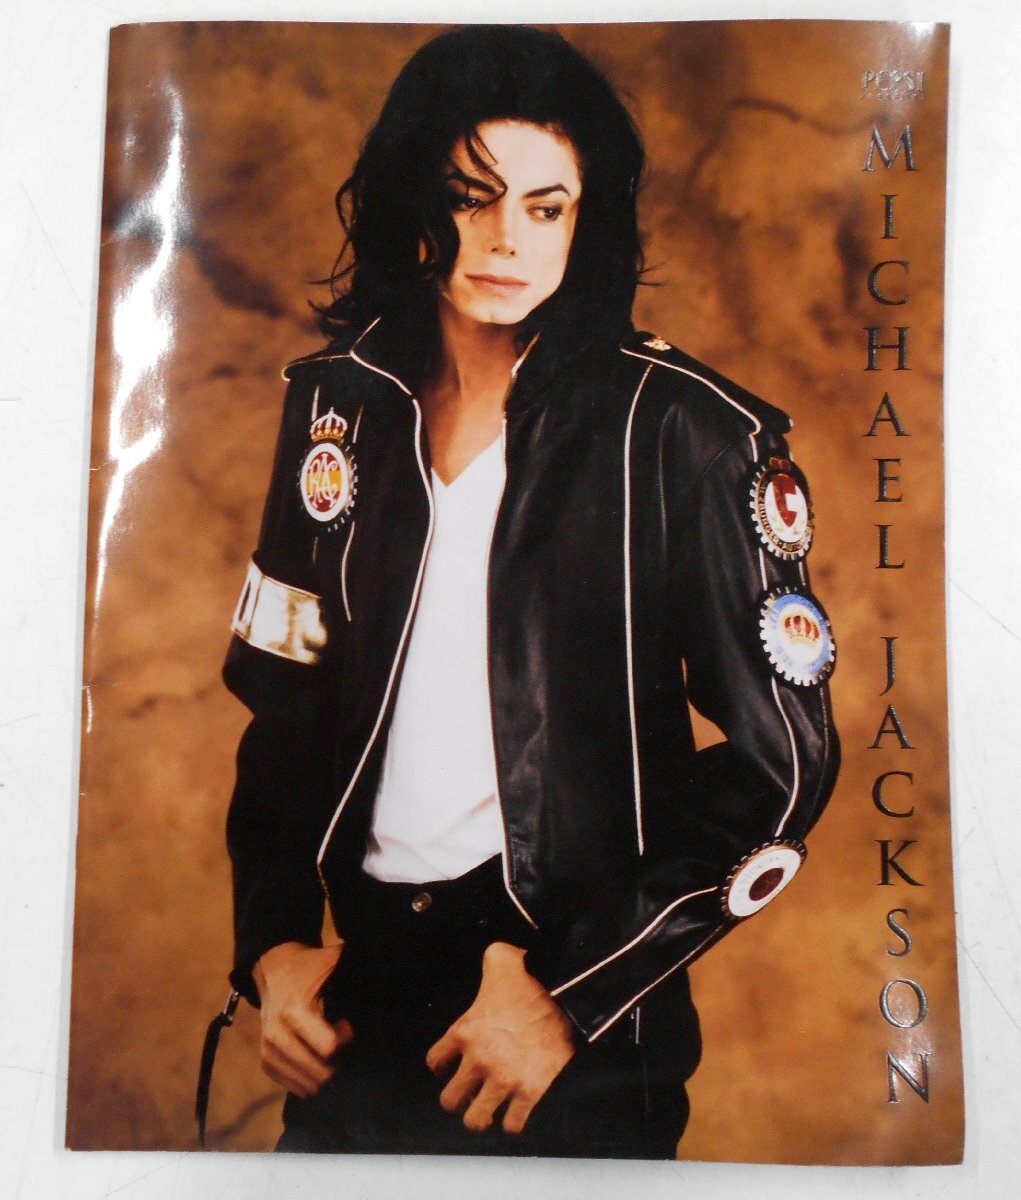 Michael Jackson Michael * Jackson Tour проспект 3 шт. комплект совместно [se329]